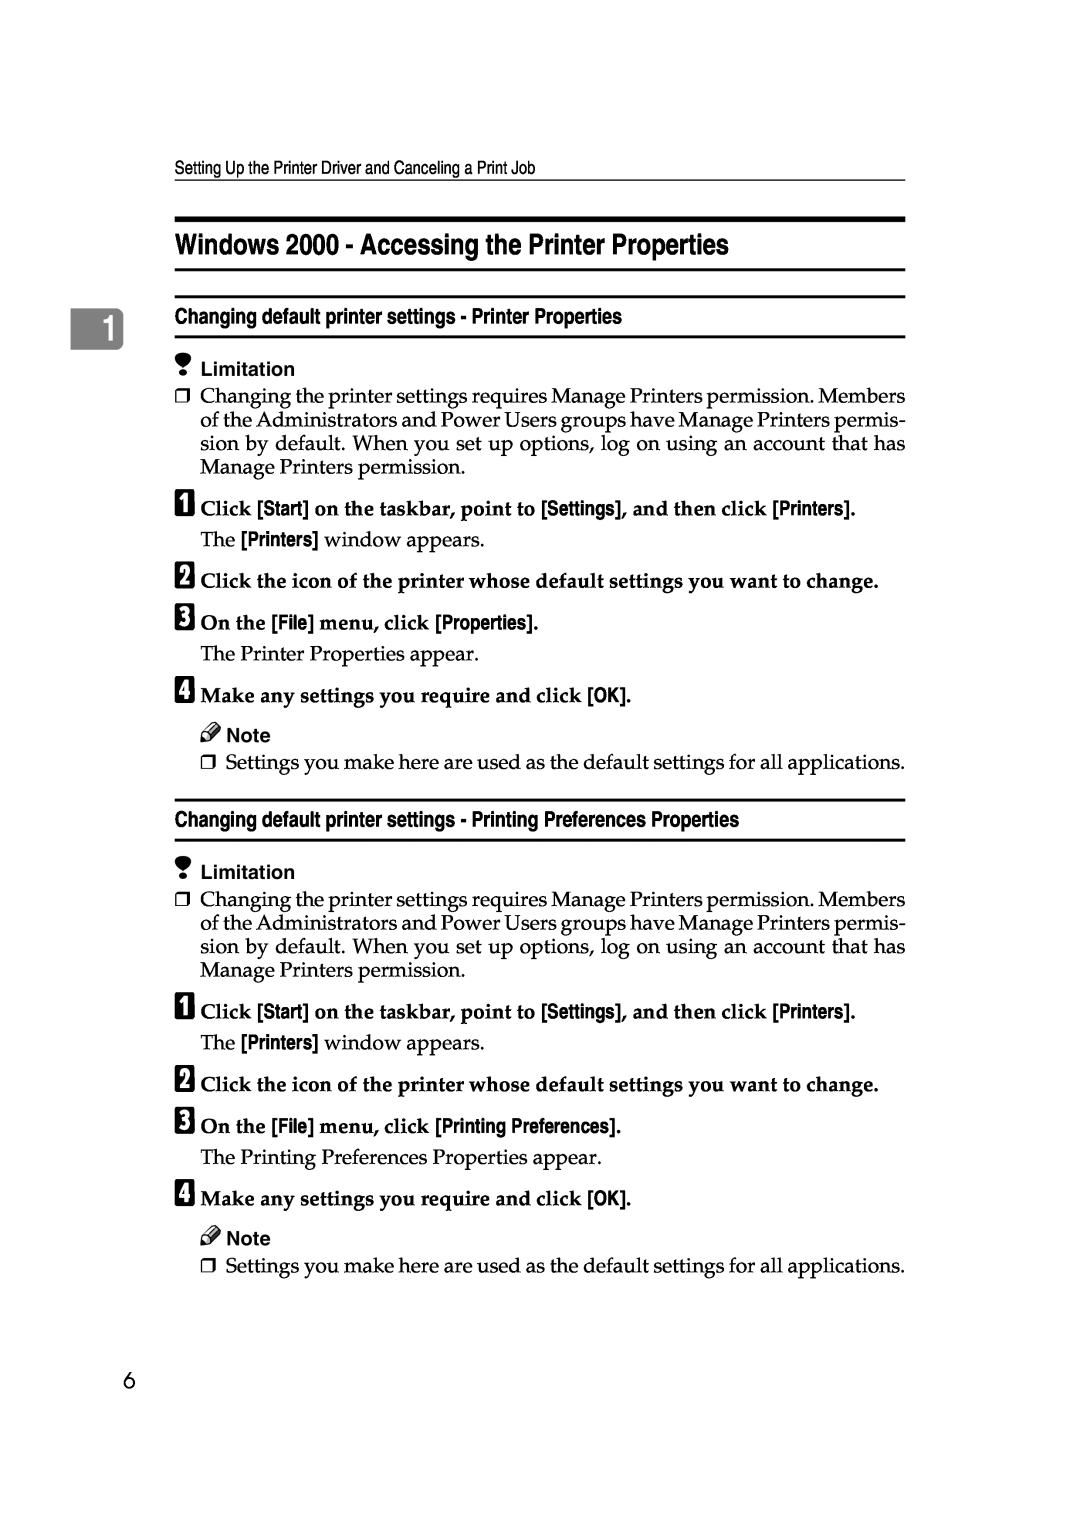 Lanier AP3200 manual Windows 2000 - Accessing the Printer Properties 